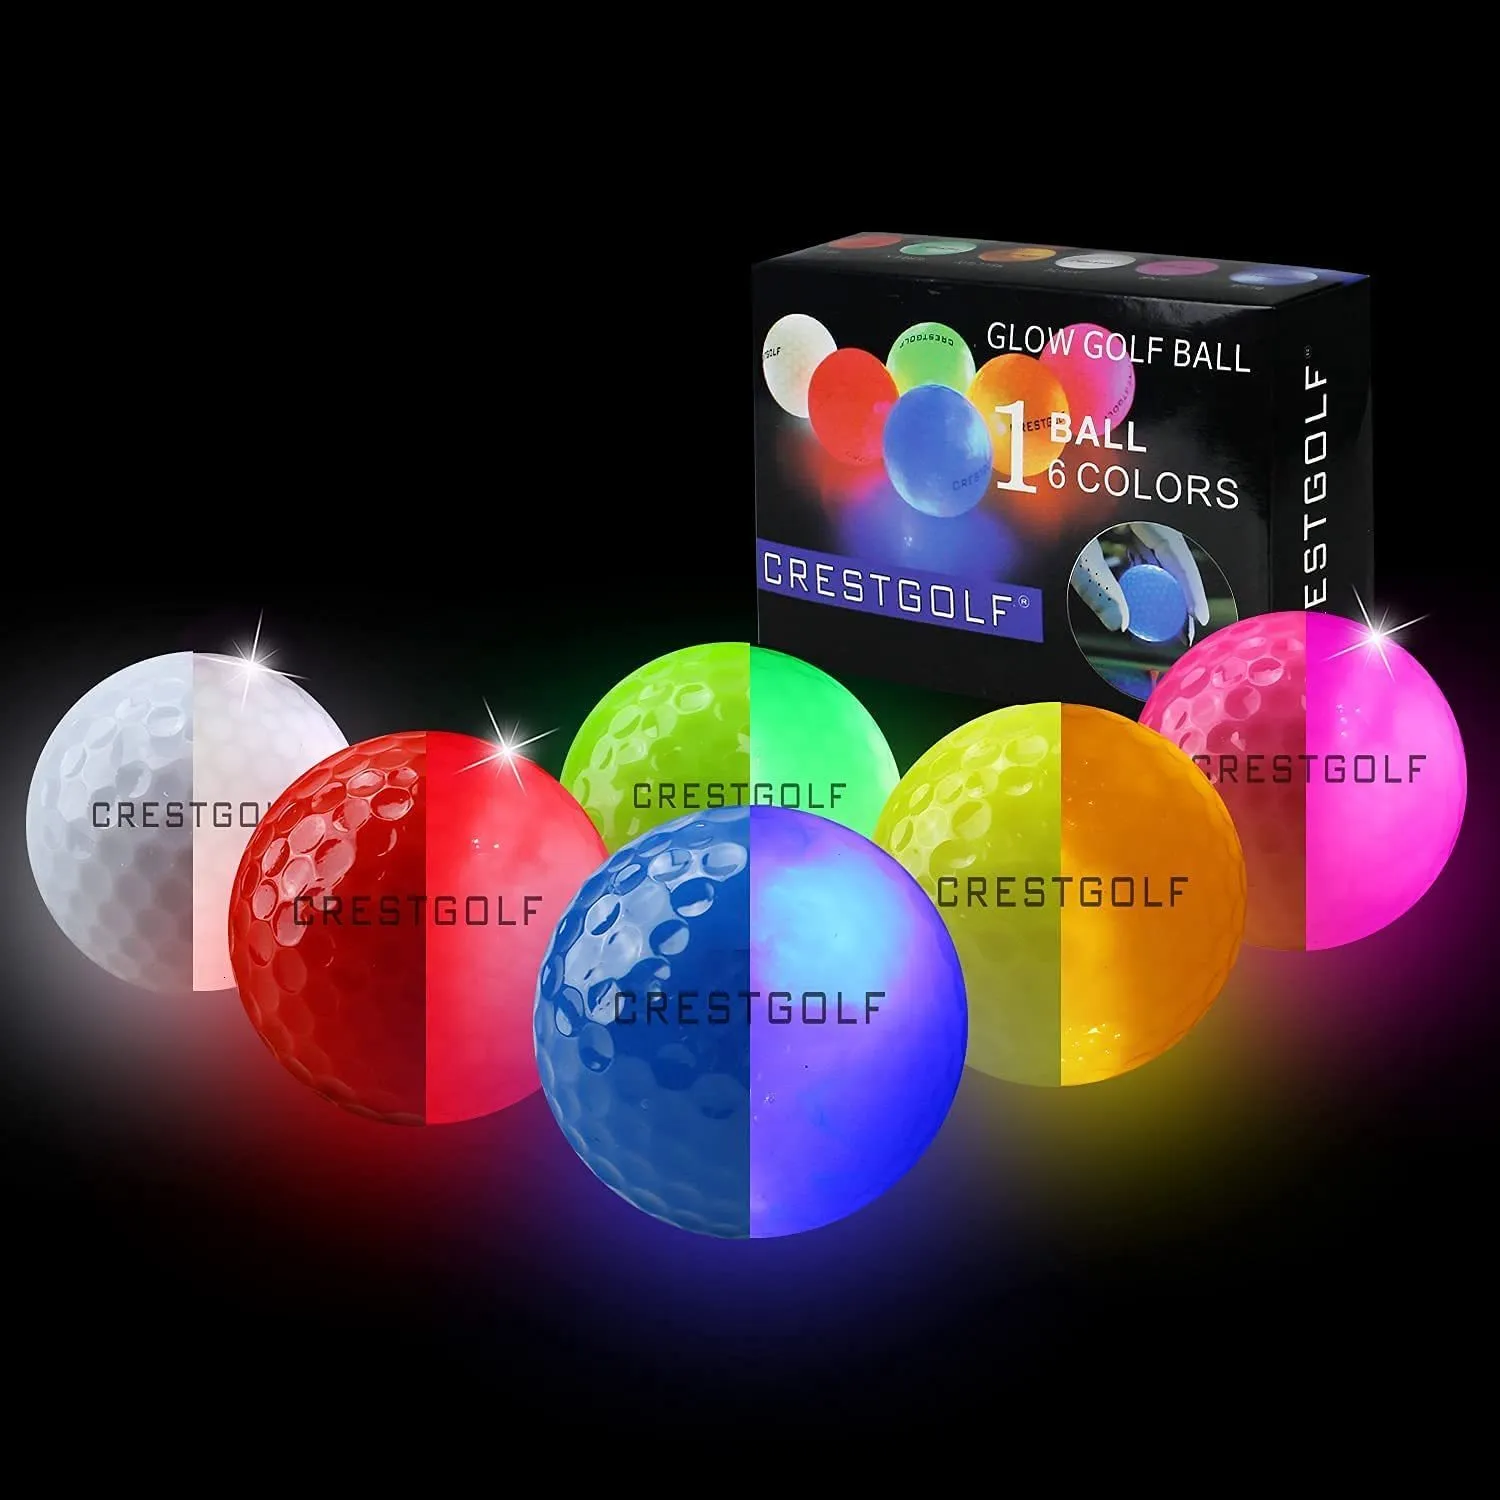 Golfballen Crestgolf Led golfballen voor nachtgloed in de donkere golfbal Super Bright Six Color for Your Choice Golf Gift voor golfers 230311